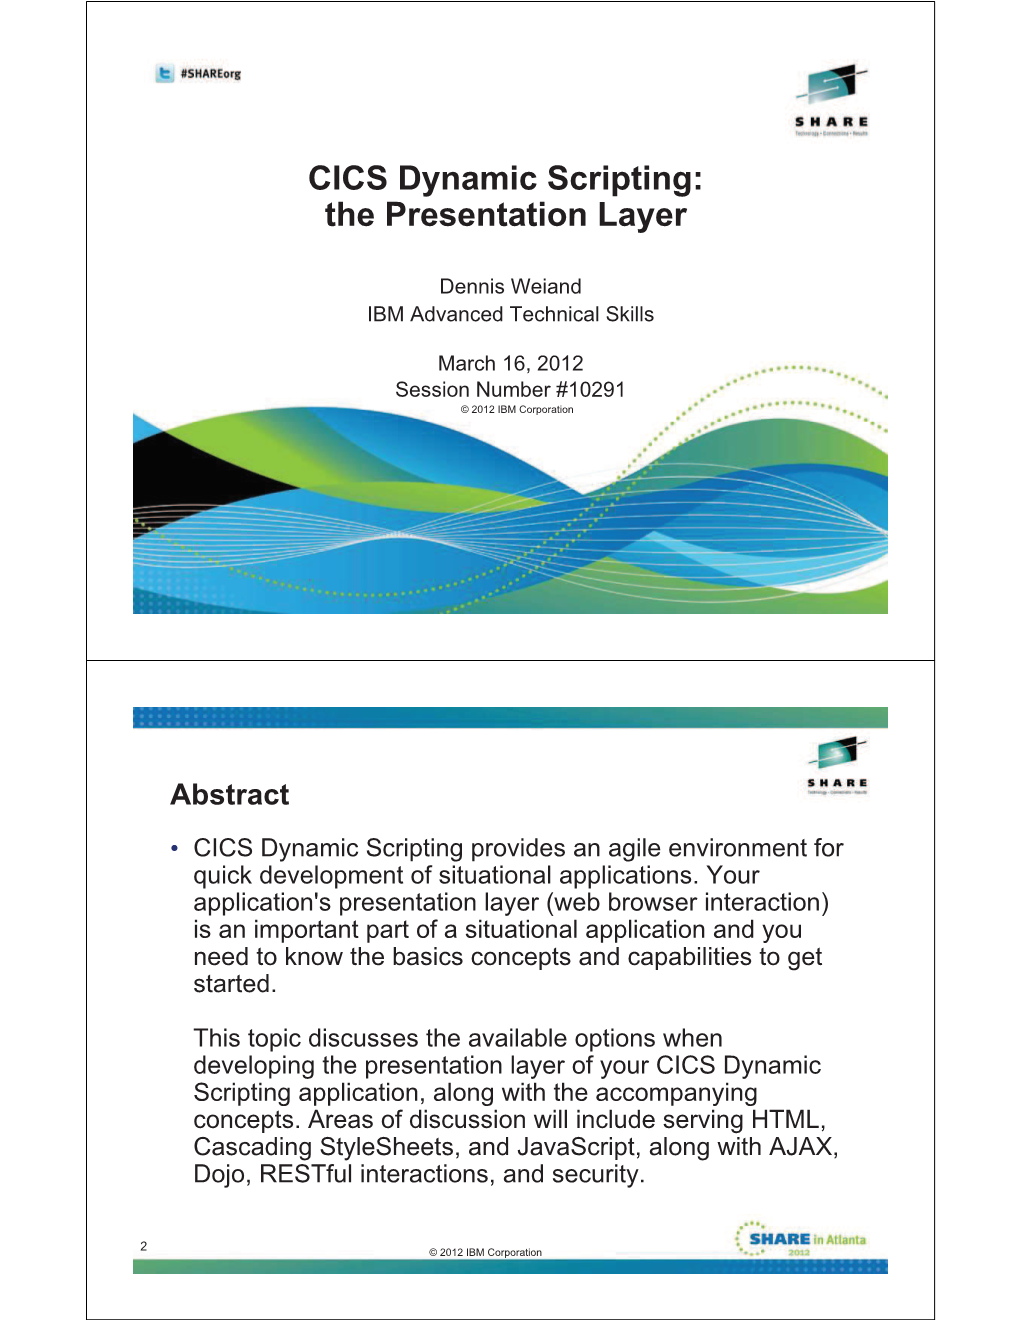 CICS Dynamic Scripting: Application Presentation Layer Options